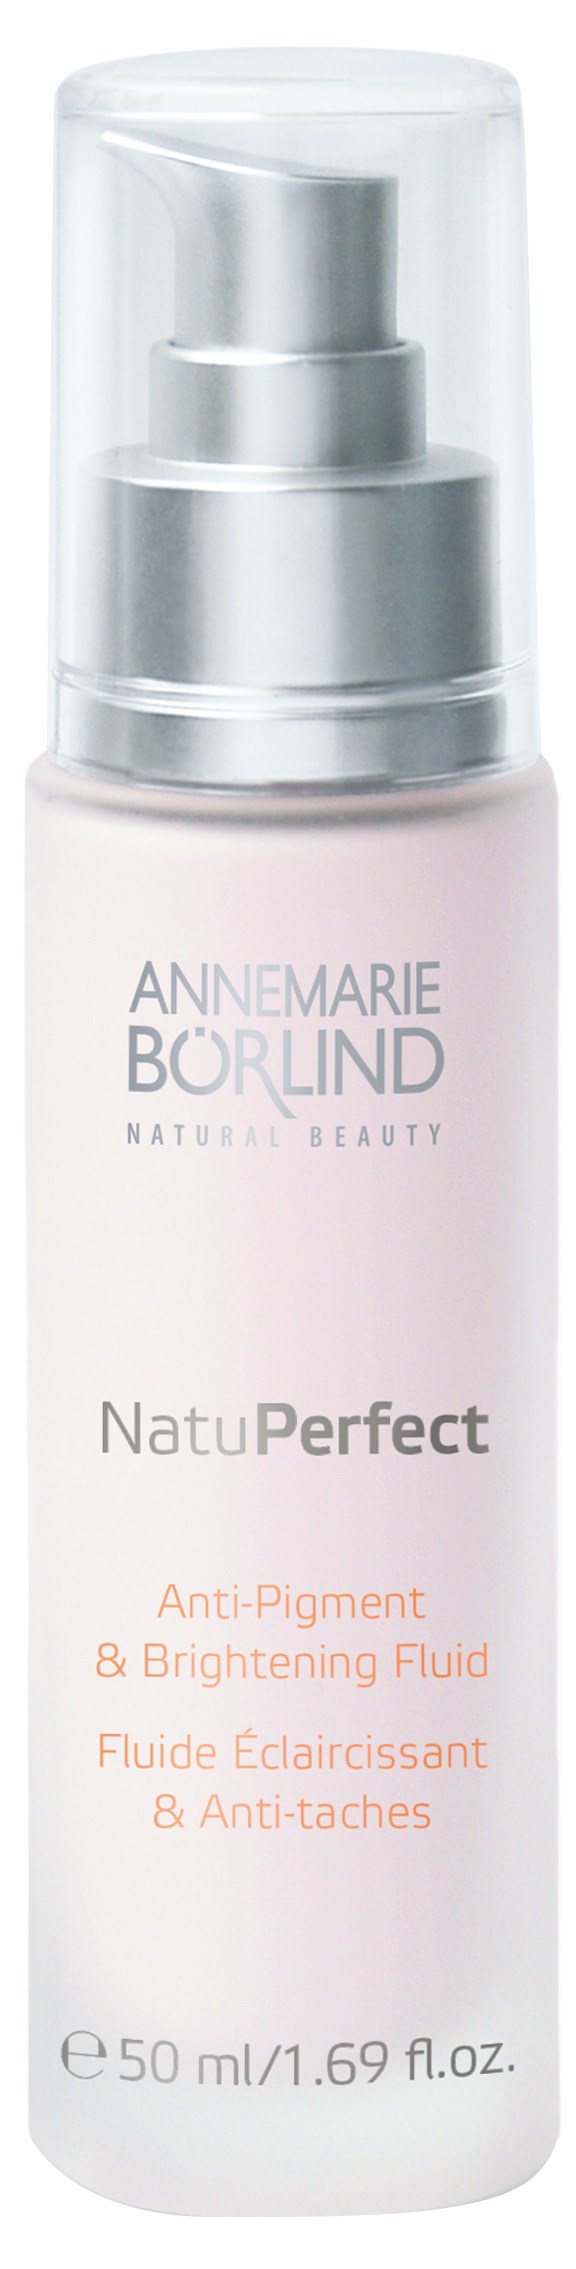 Beauty Specials NatuPerfect Anti-Pigment & Brightening Fluid